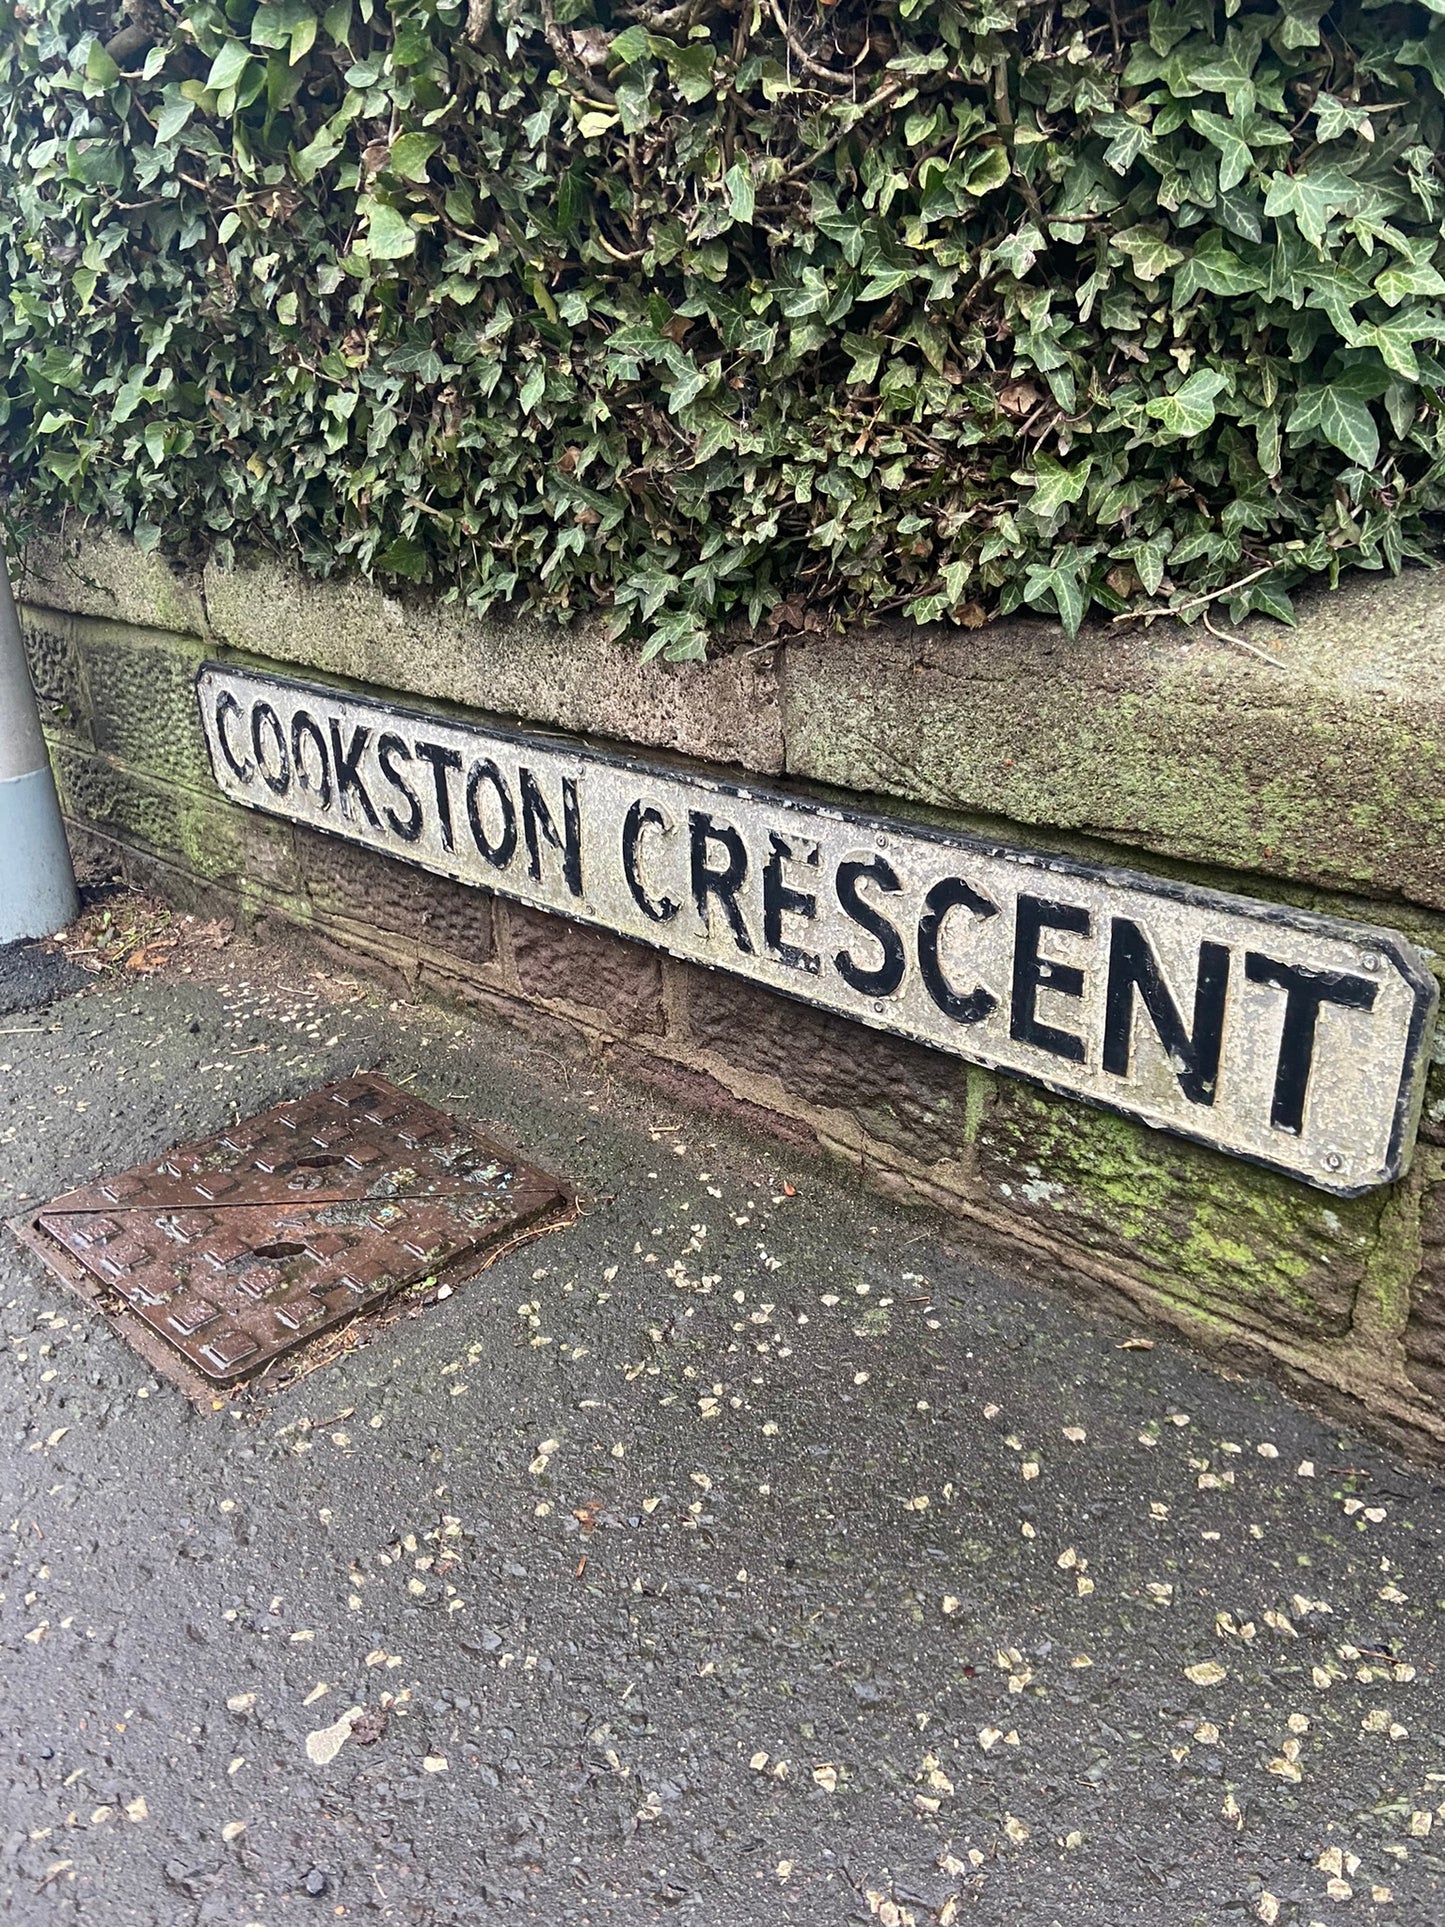 Cookston Crescent- House Blend